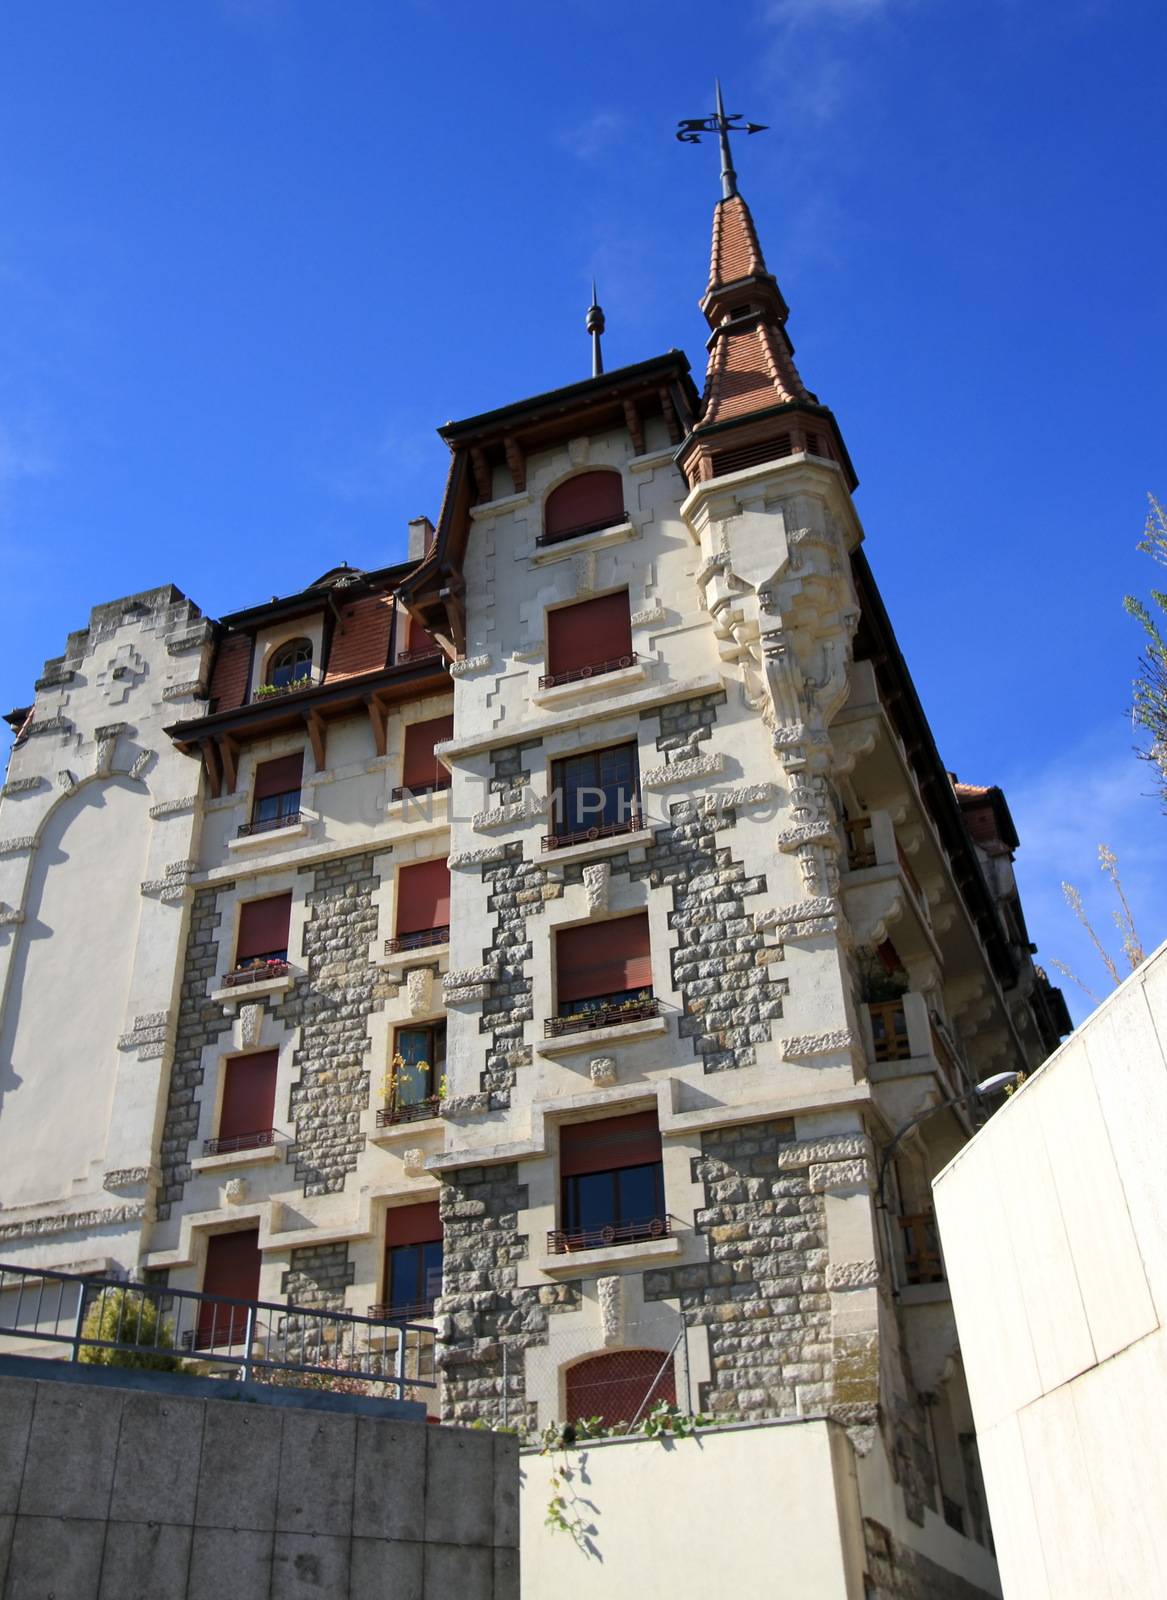 Close up on old building in Geneva, Switzerland